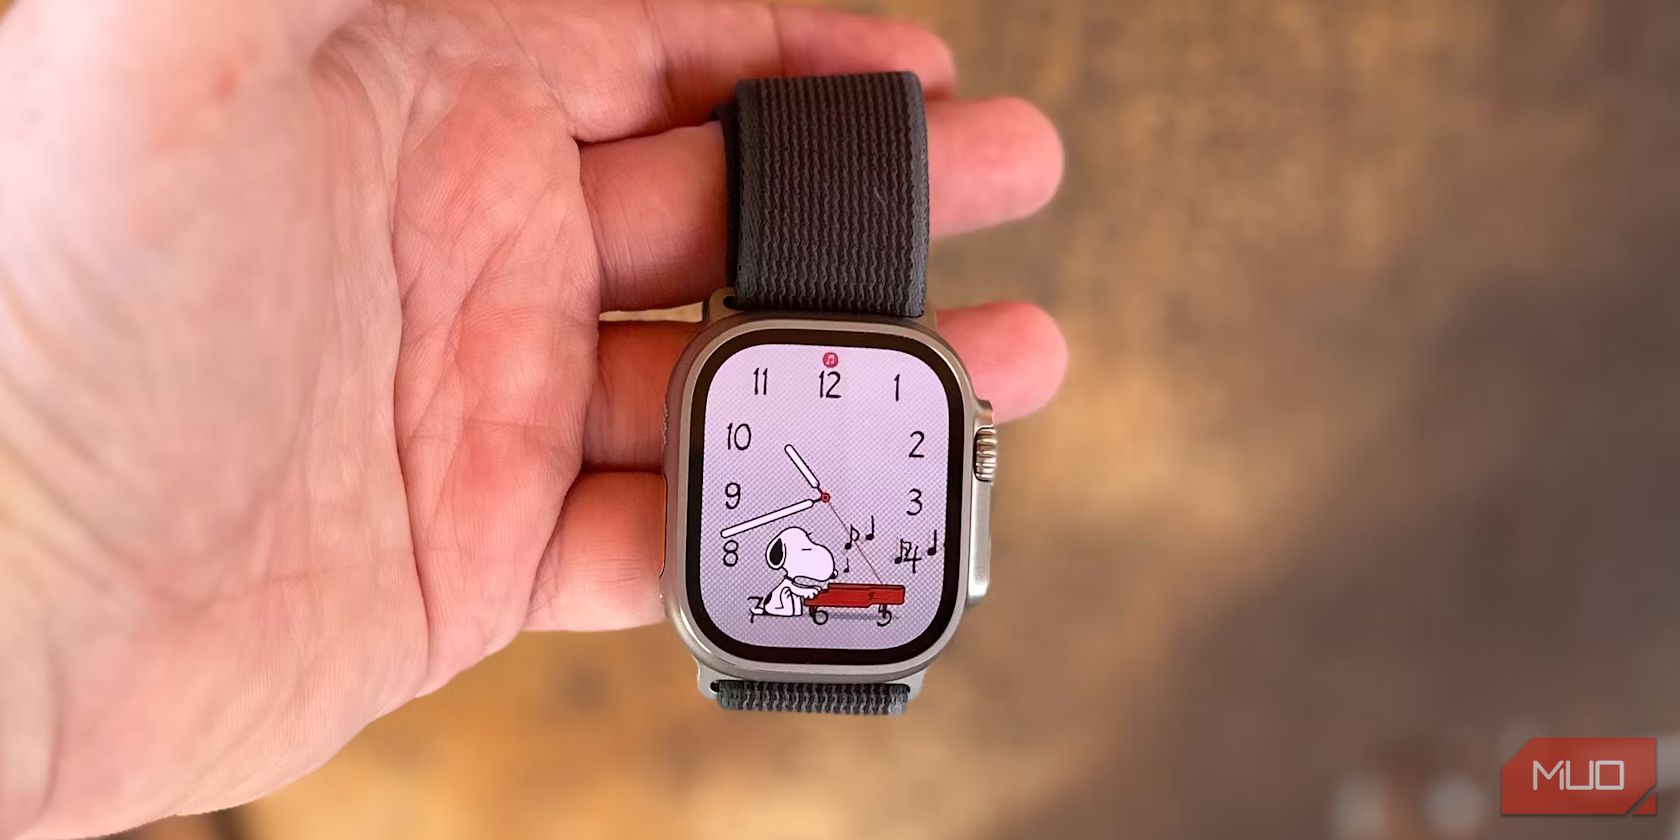 Apple Watch Ultra 2 in a man's hand showing a cartoon watch face